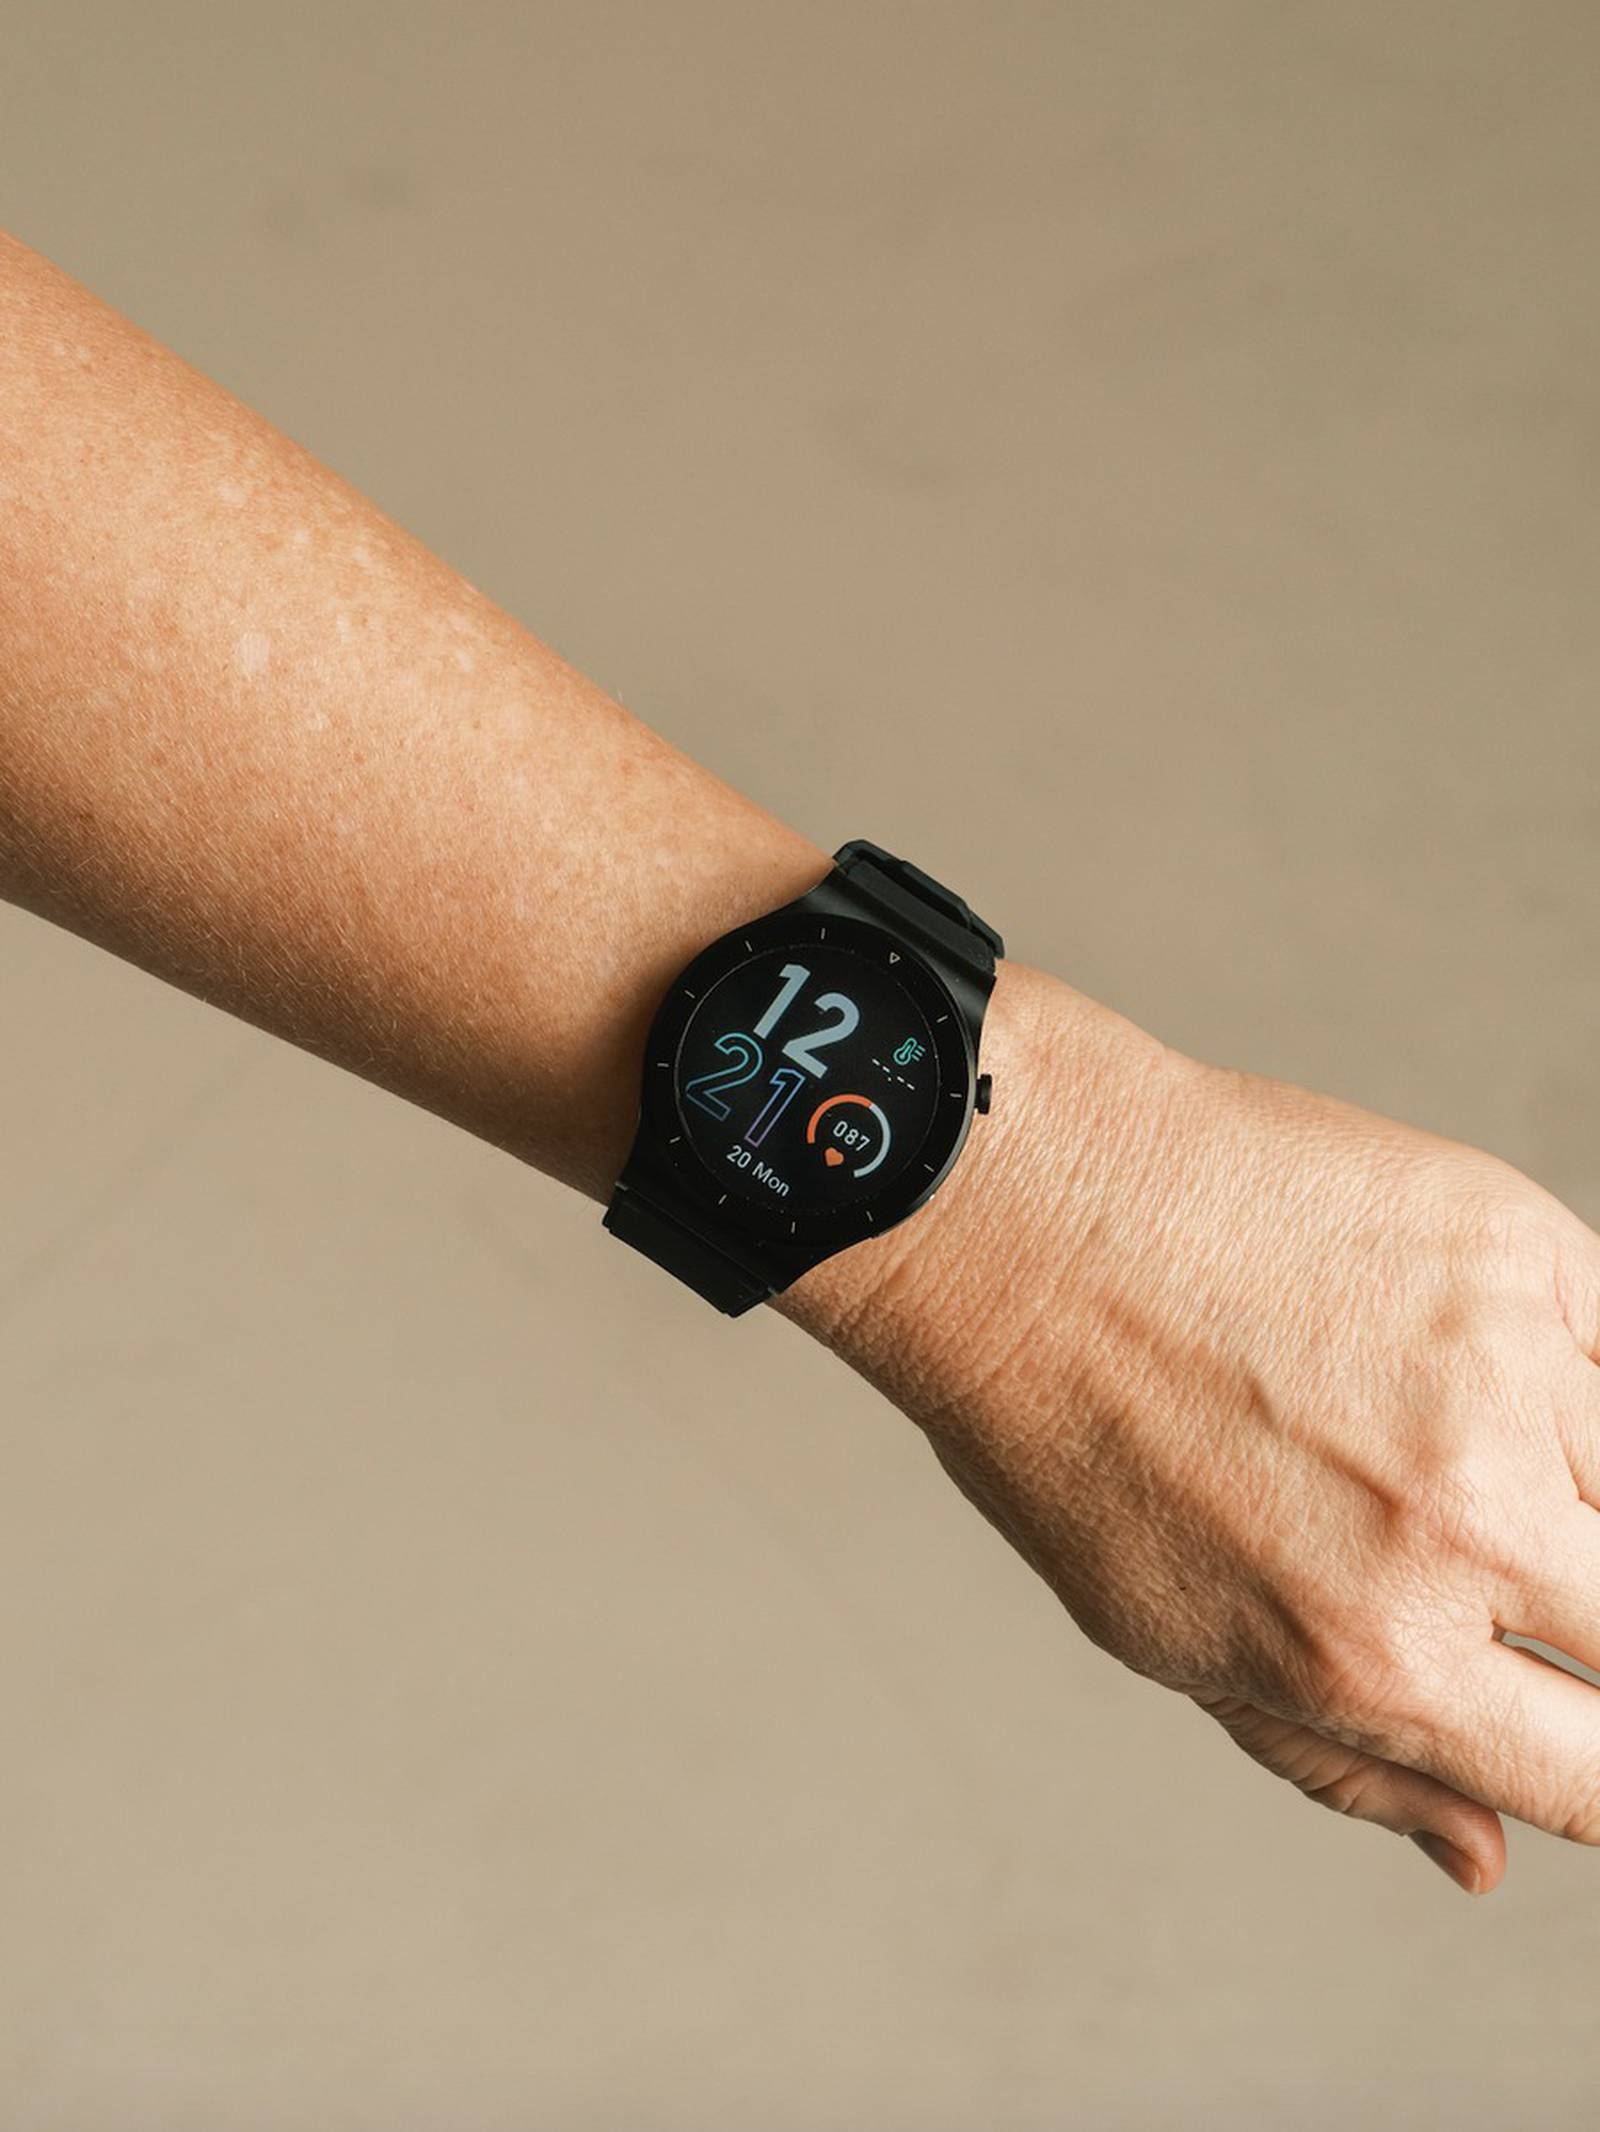 A black smartwatch